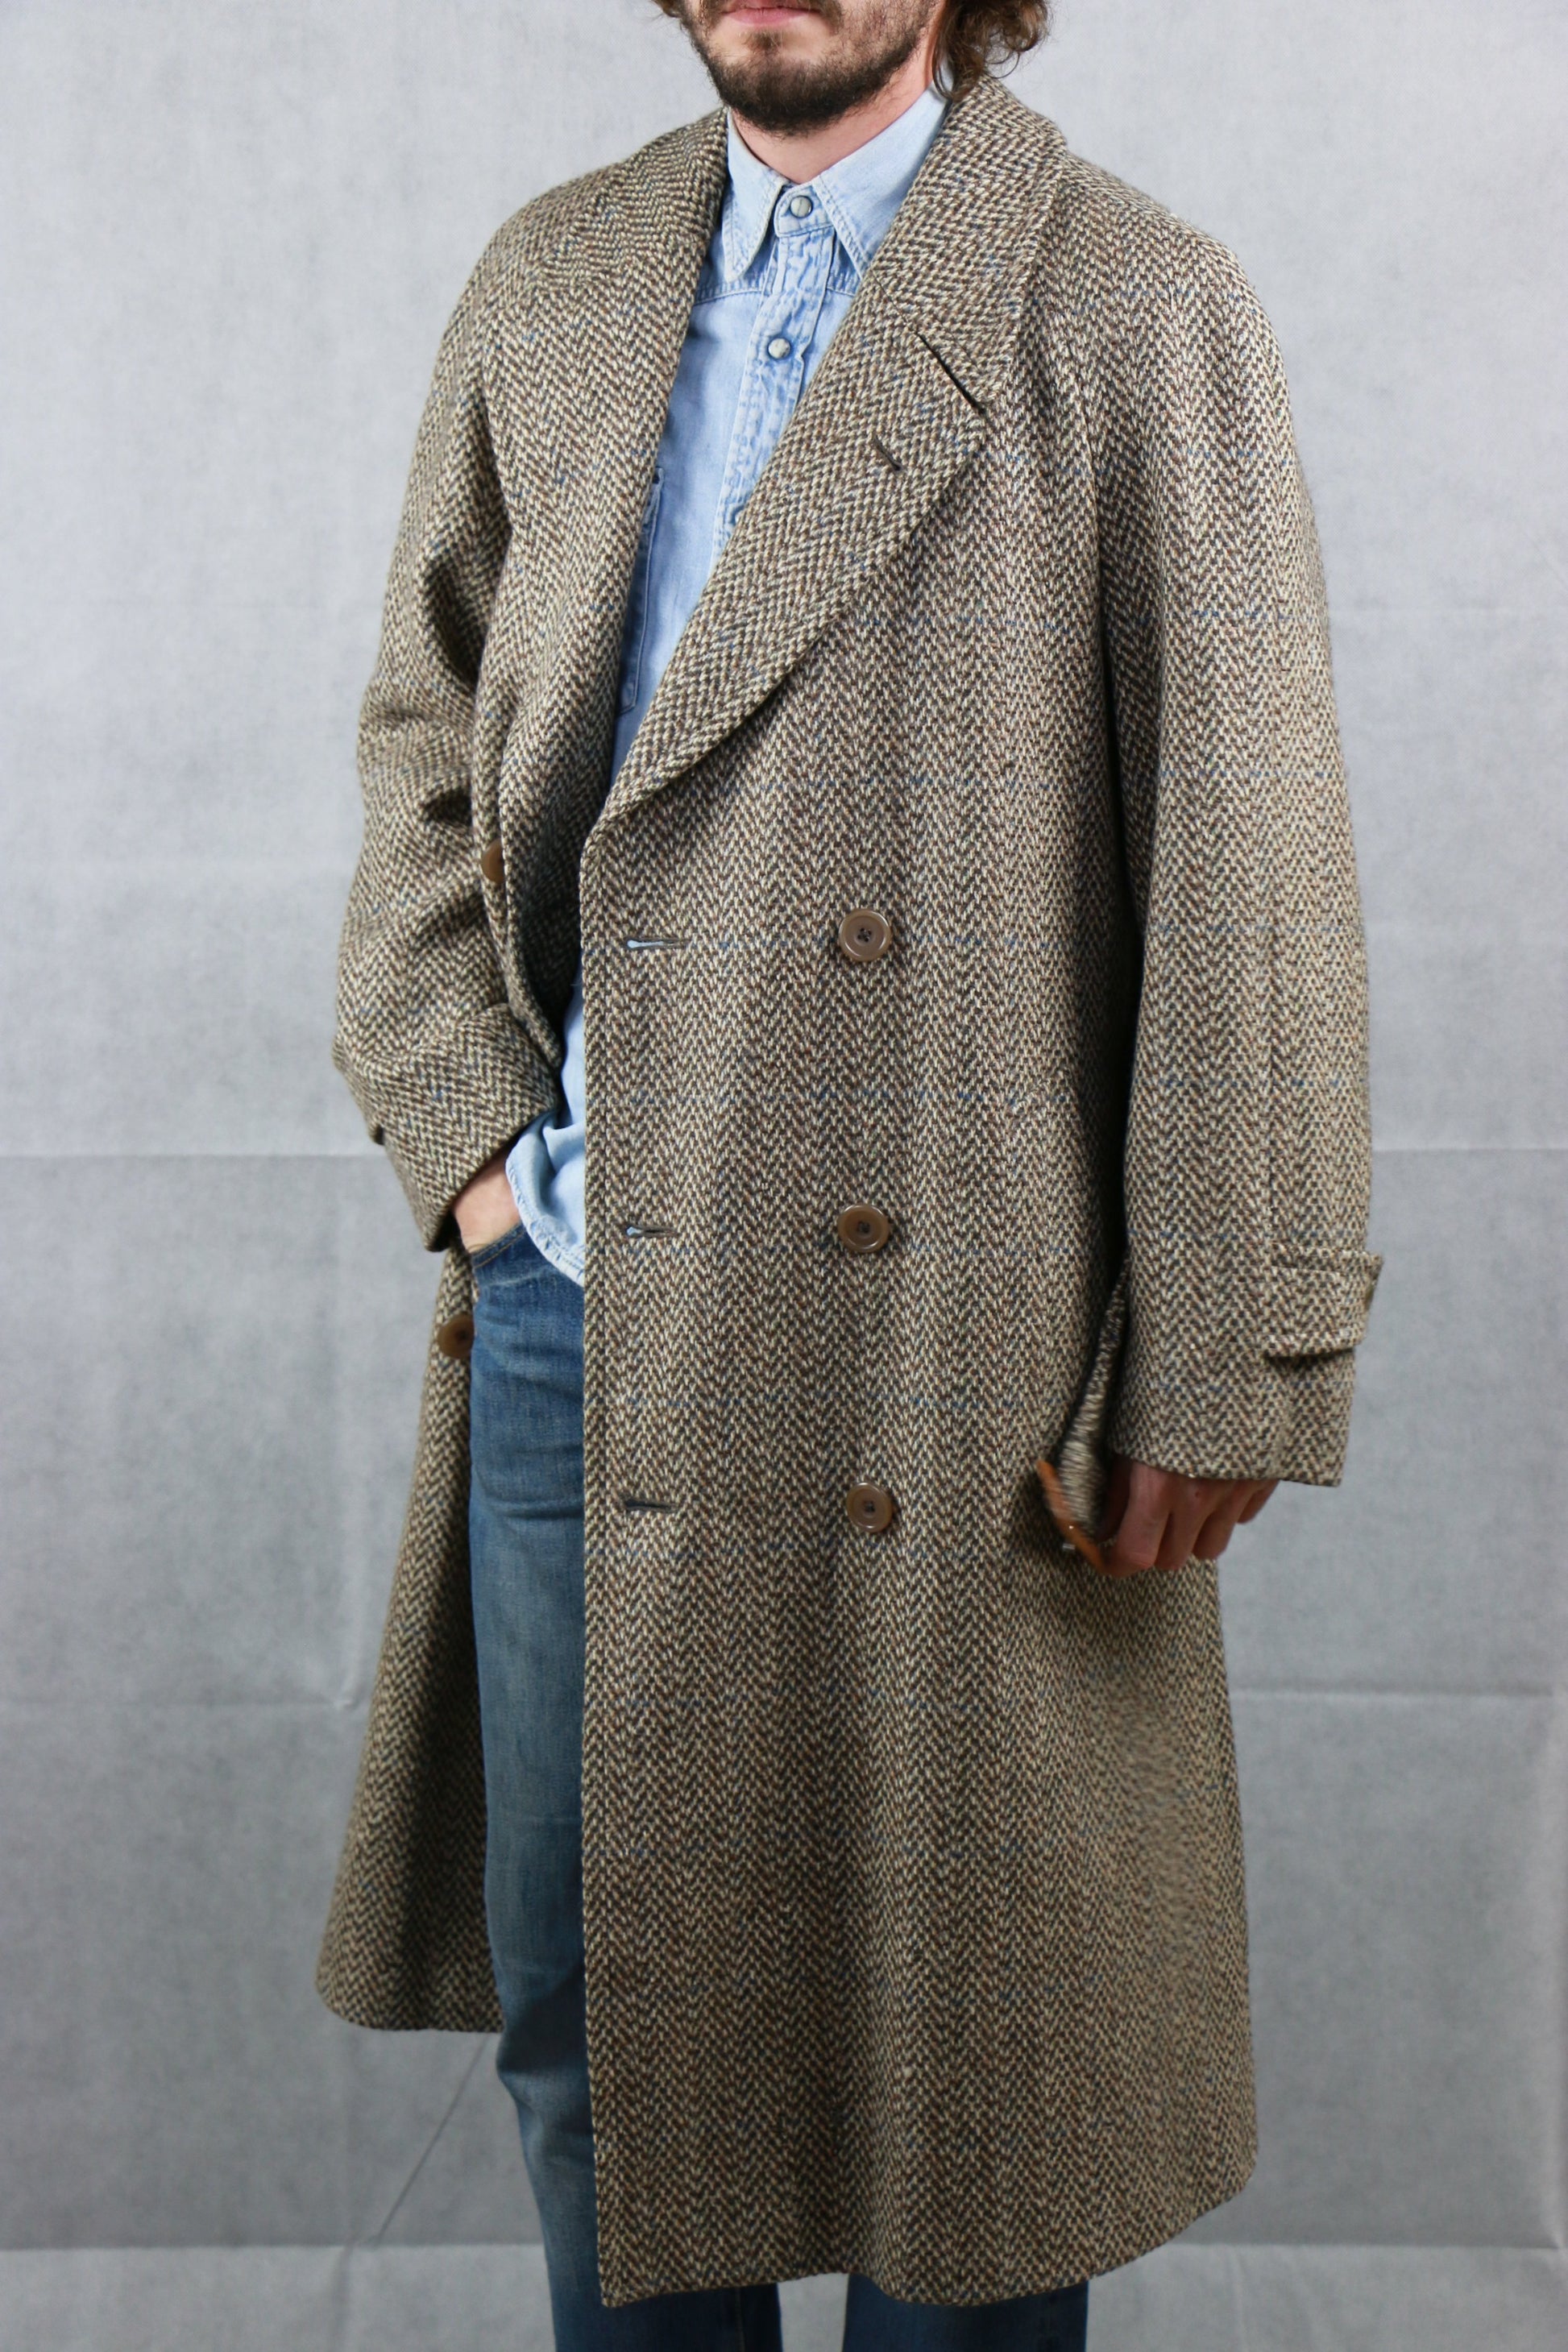 Aquascutum Double-breasted Tweed Coat - vintage clothing clochard92.com 